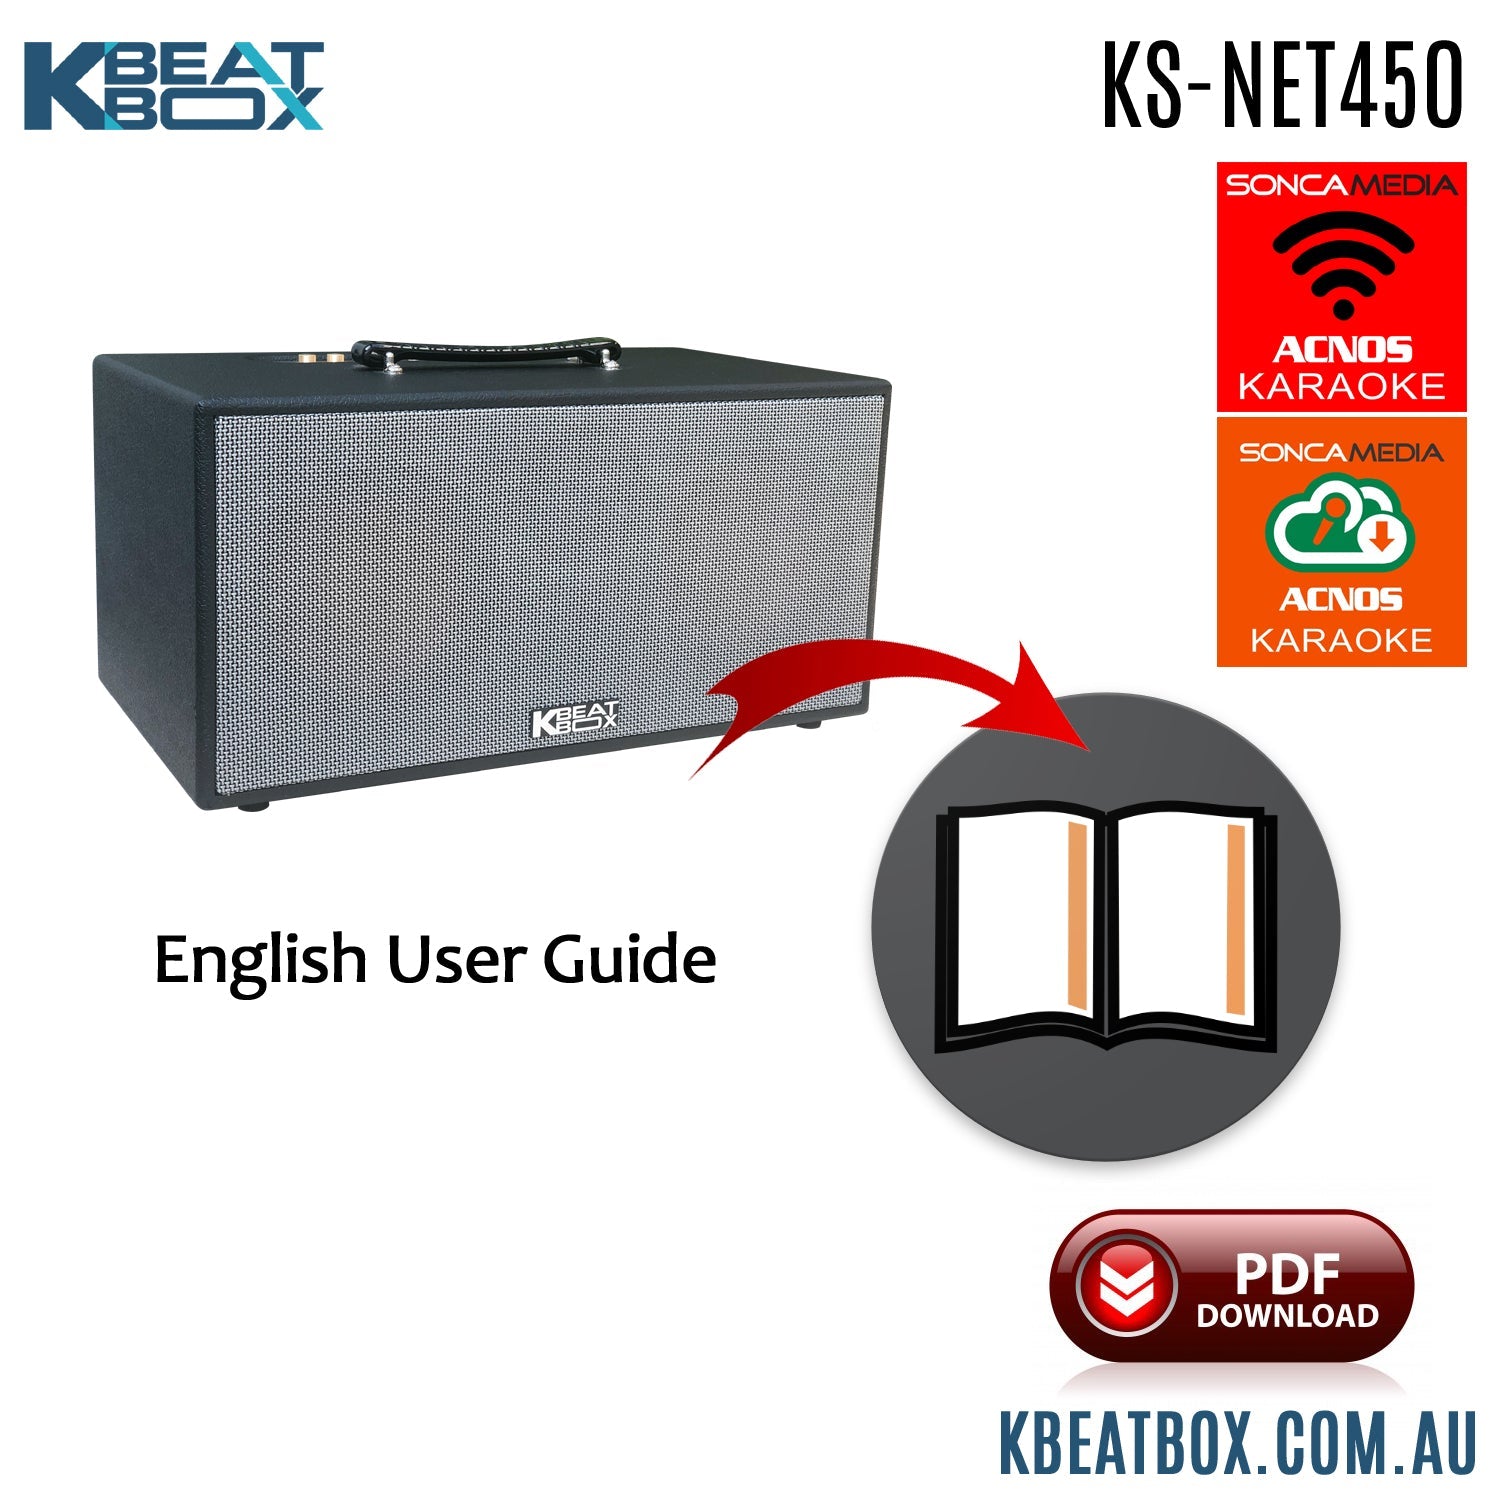 How To Connect Guide - KBeatBox KS-NET450 - Karaoke Home Entertainment